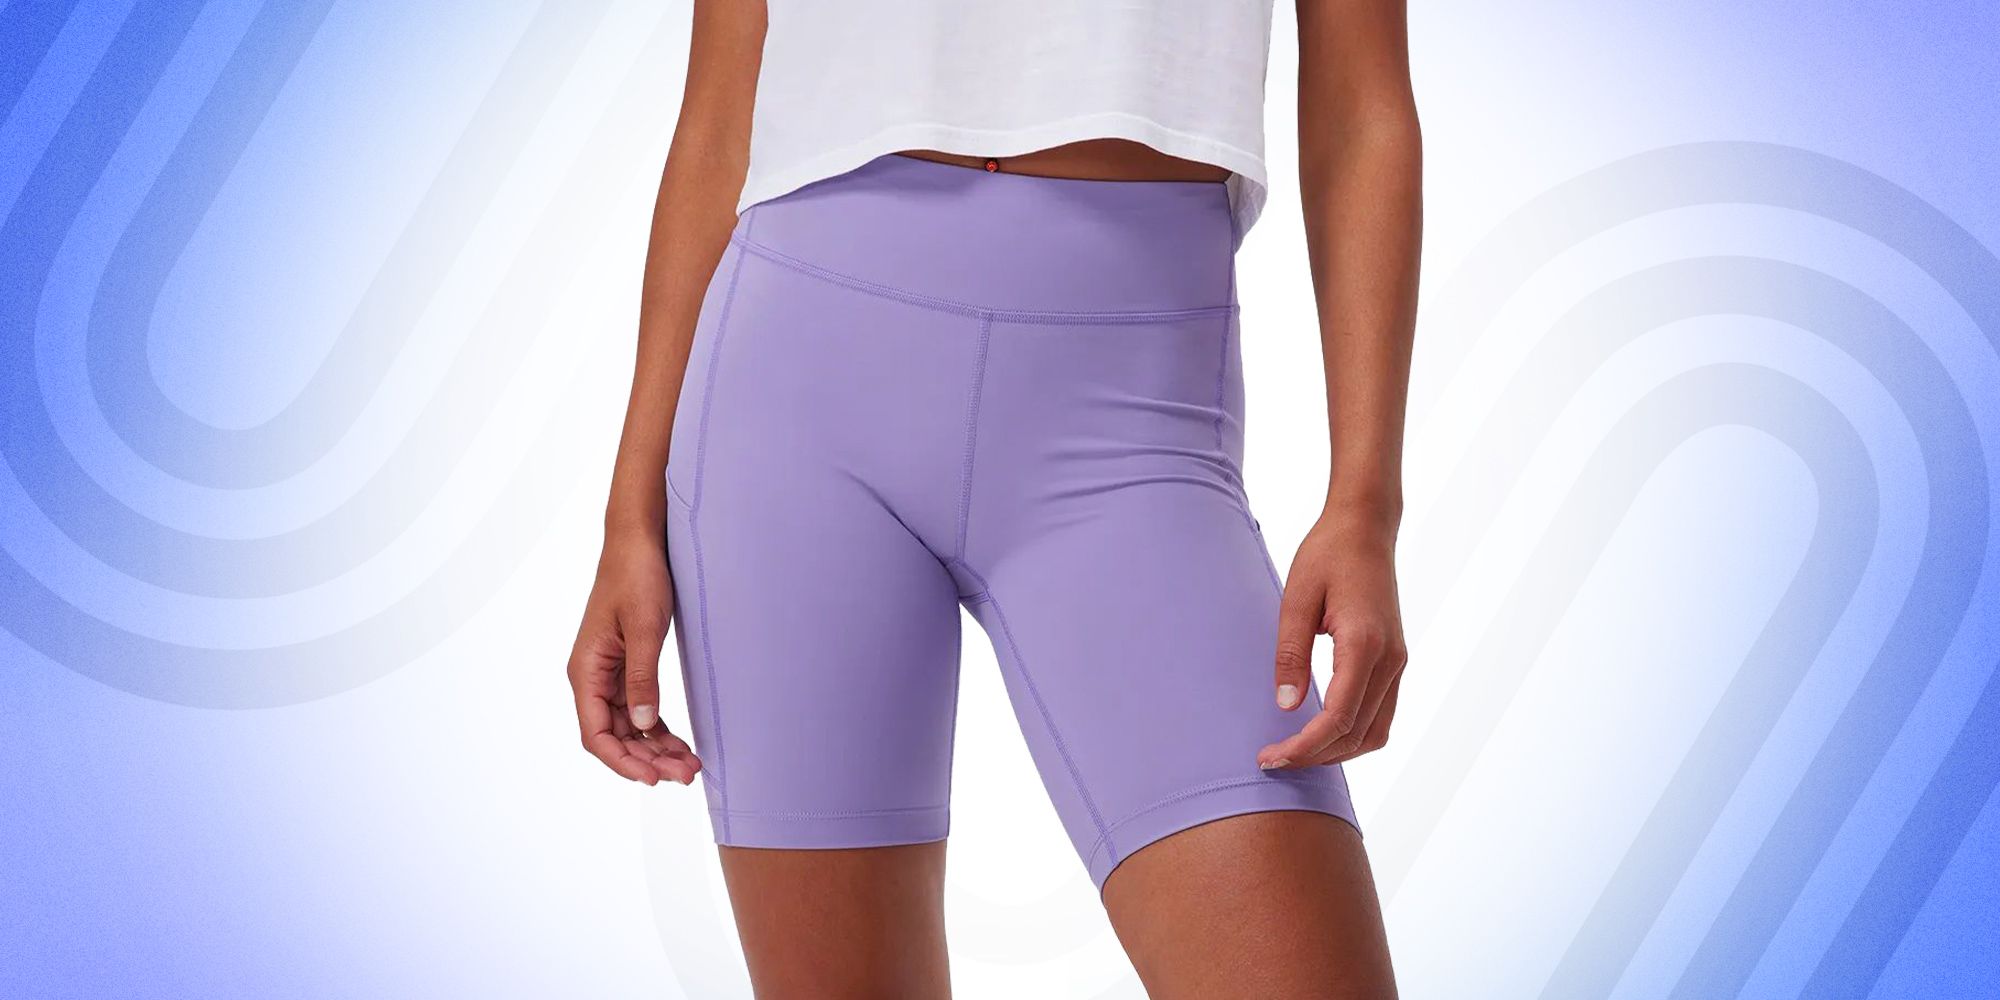 Womens Solid Color Shorts,Casual Summer Hot Pants Comfortable Loose Short Workout Thin Lace Up Pants Active Short